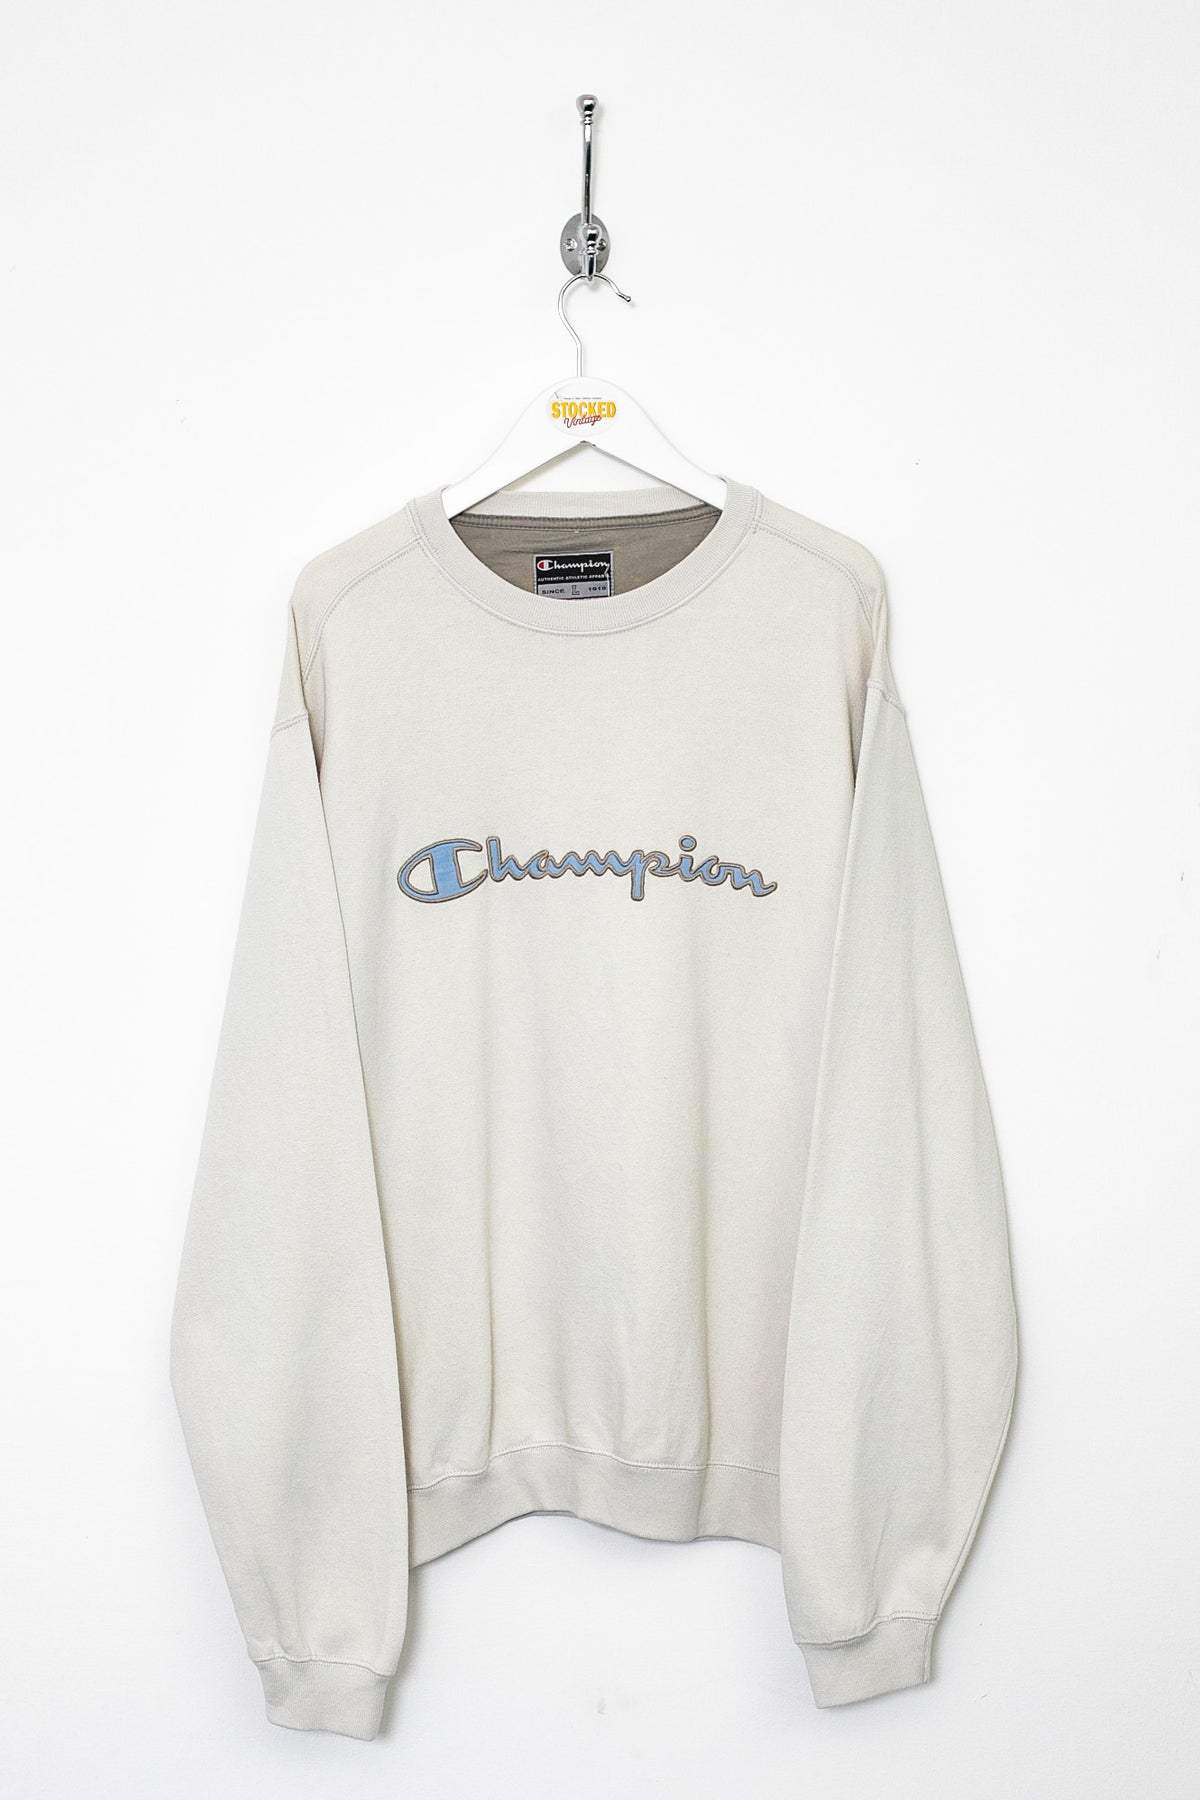 00s Champion Sweatshirt (M)